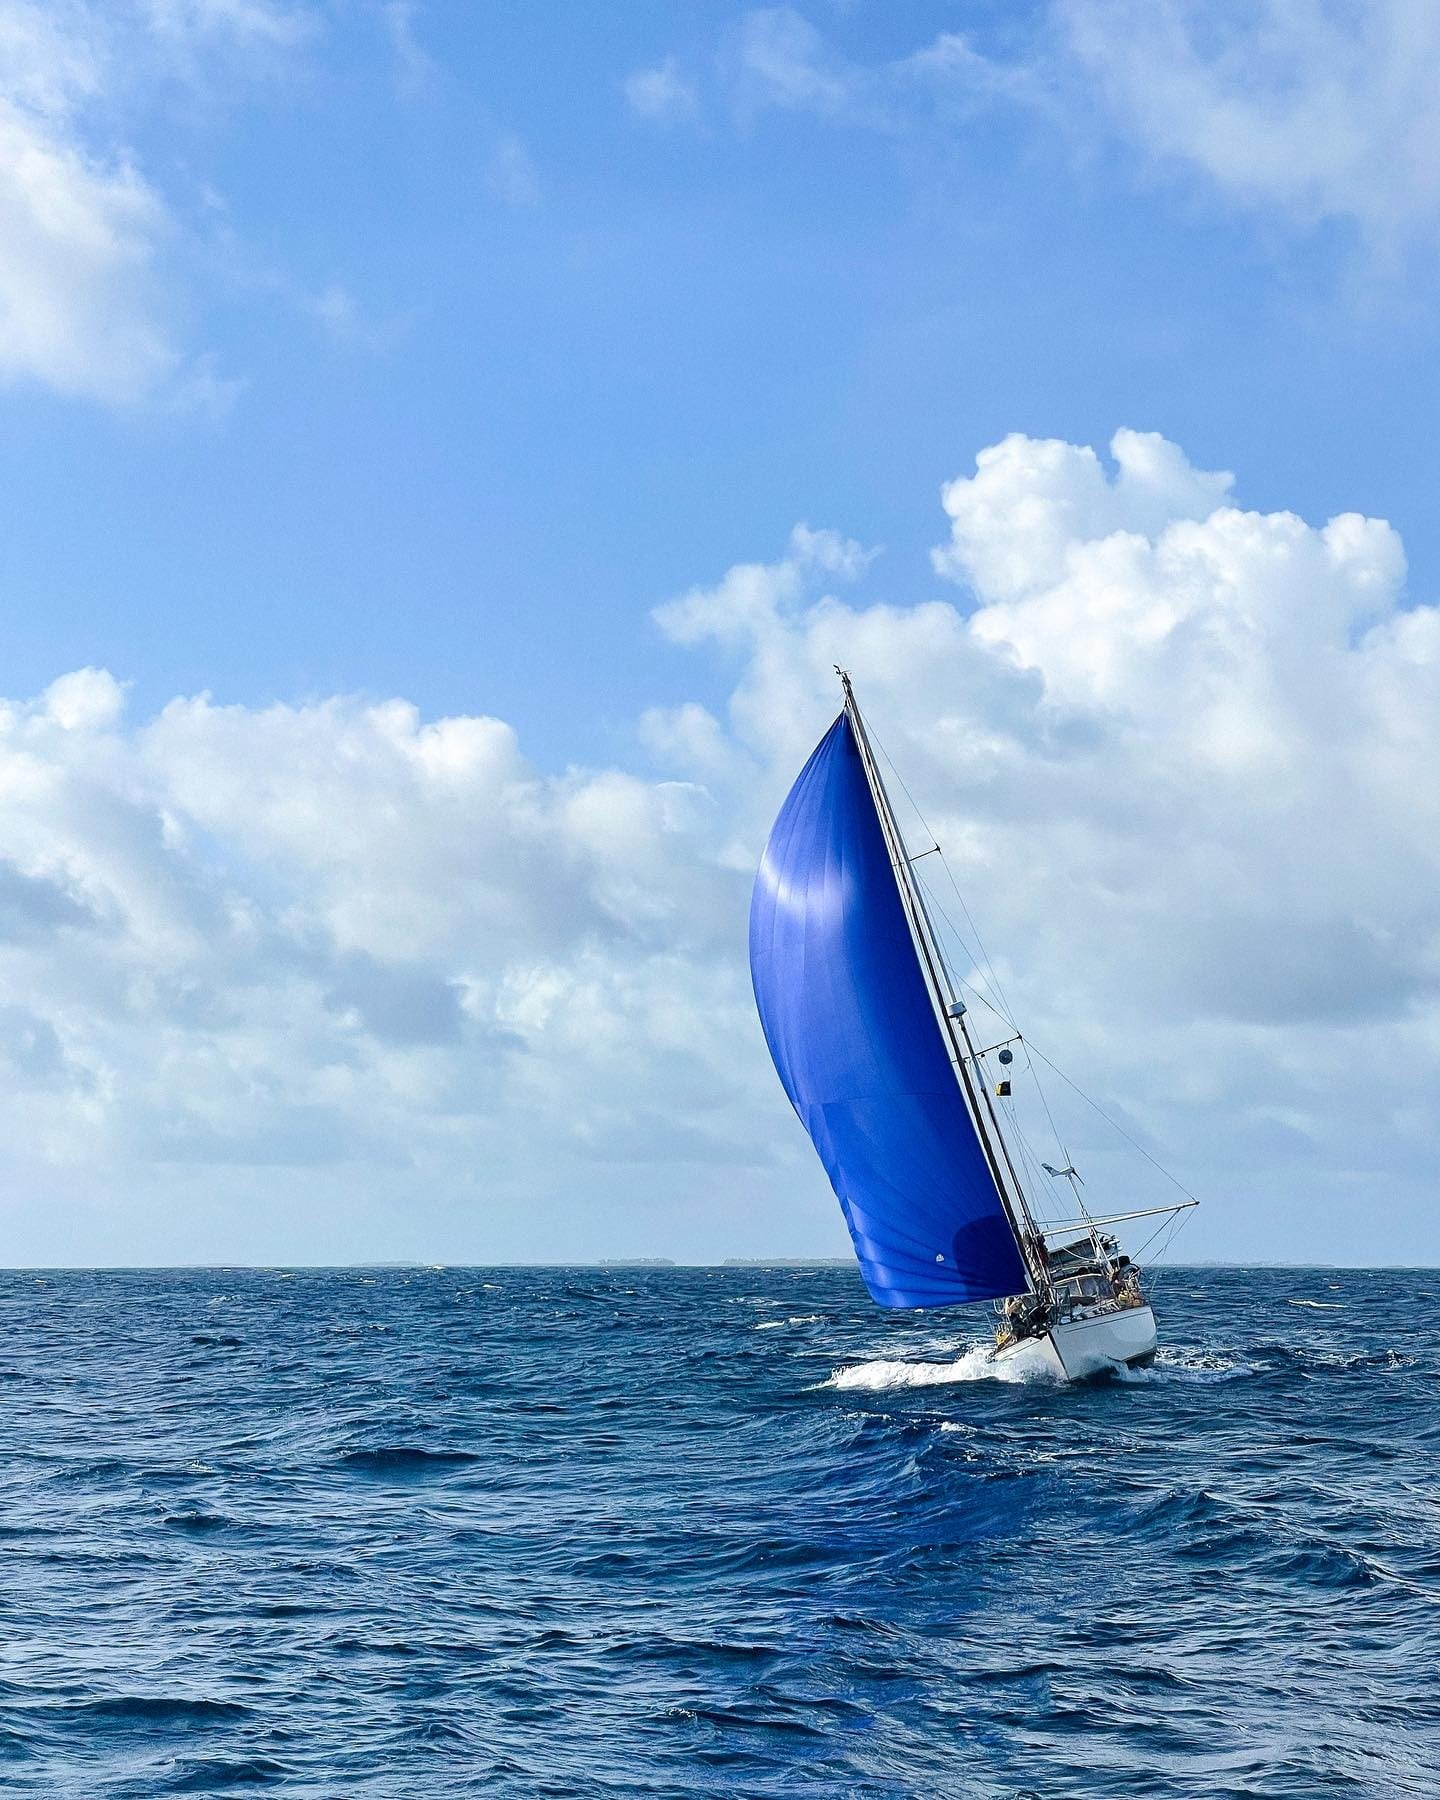 Calico Skies Sailing